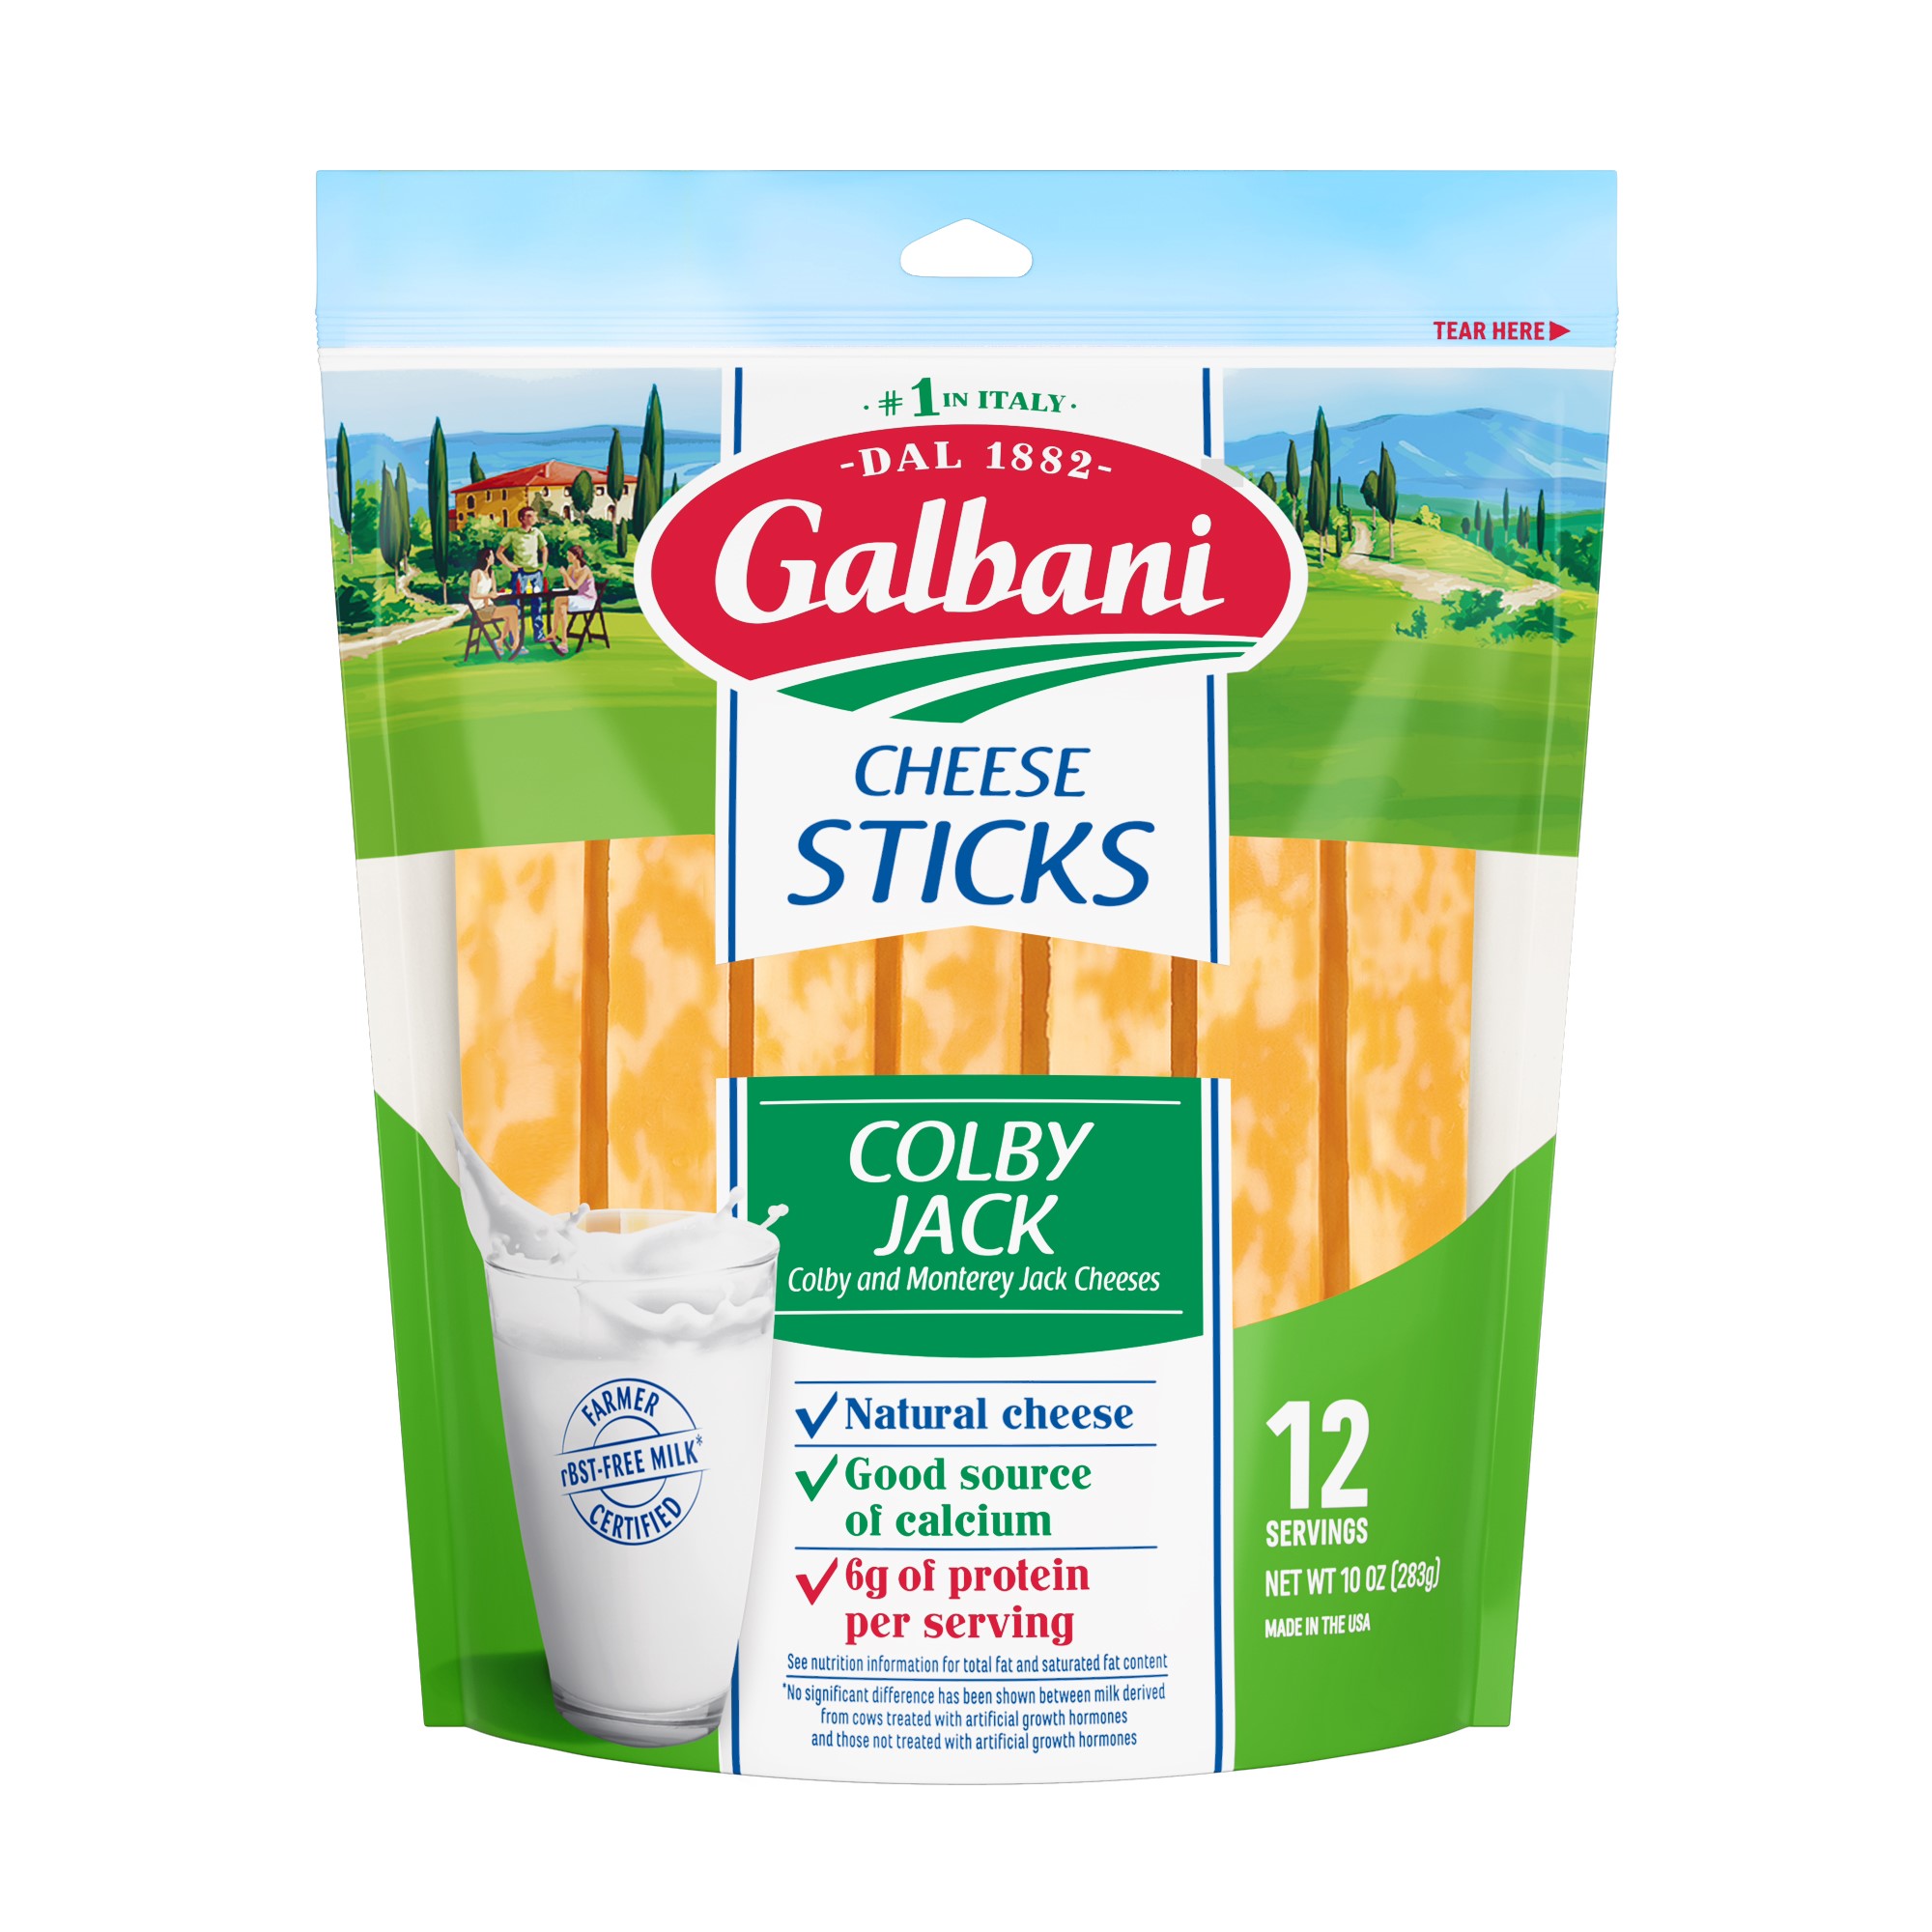 Colby Jack Stick Cheese - Galbani Cheese